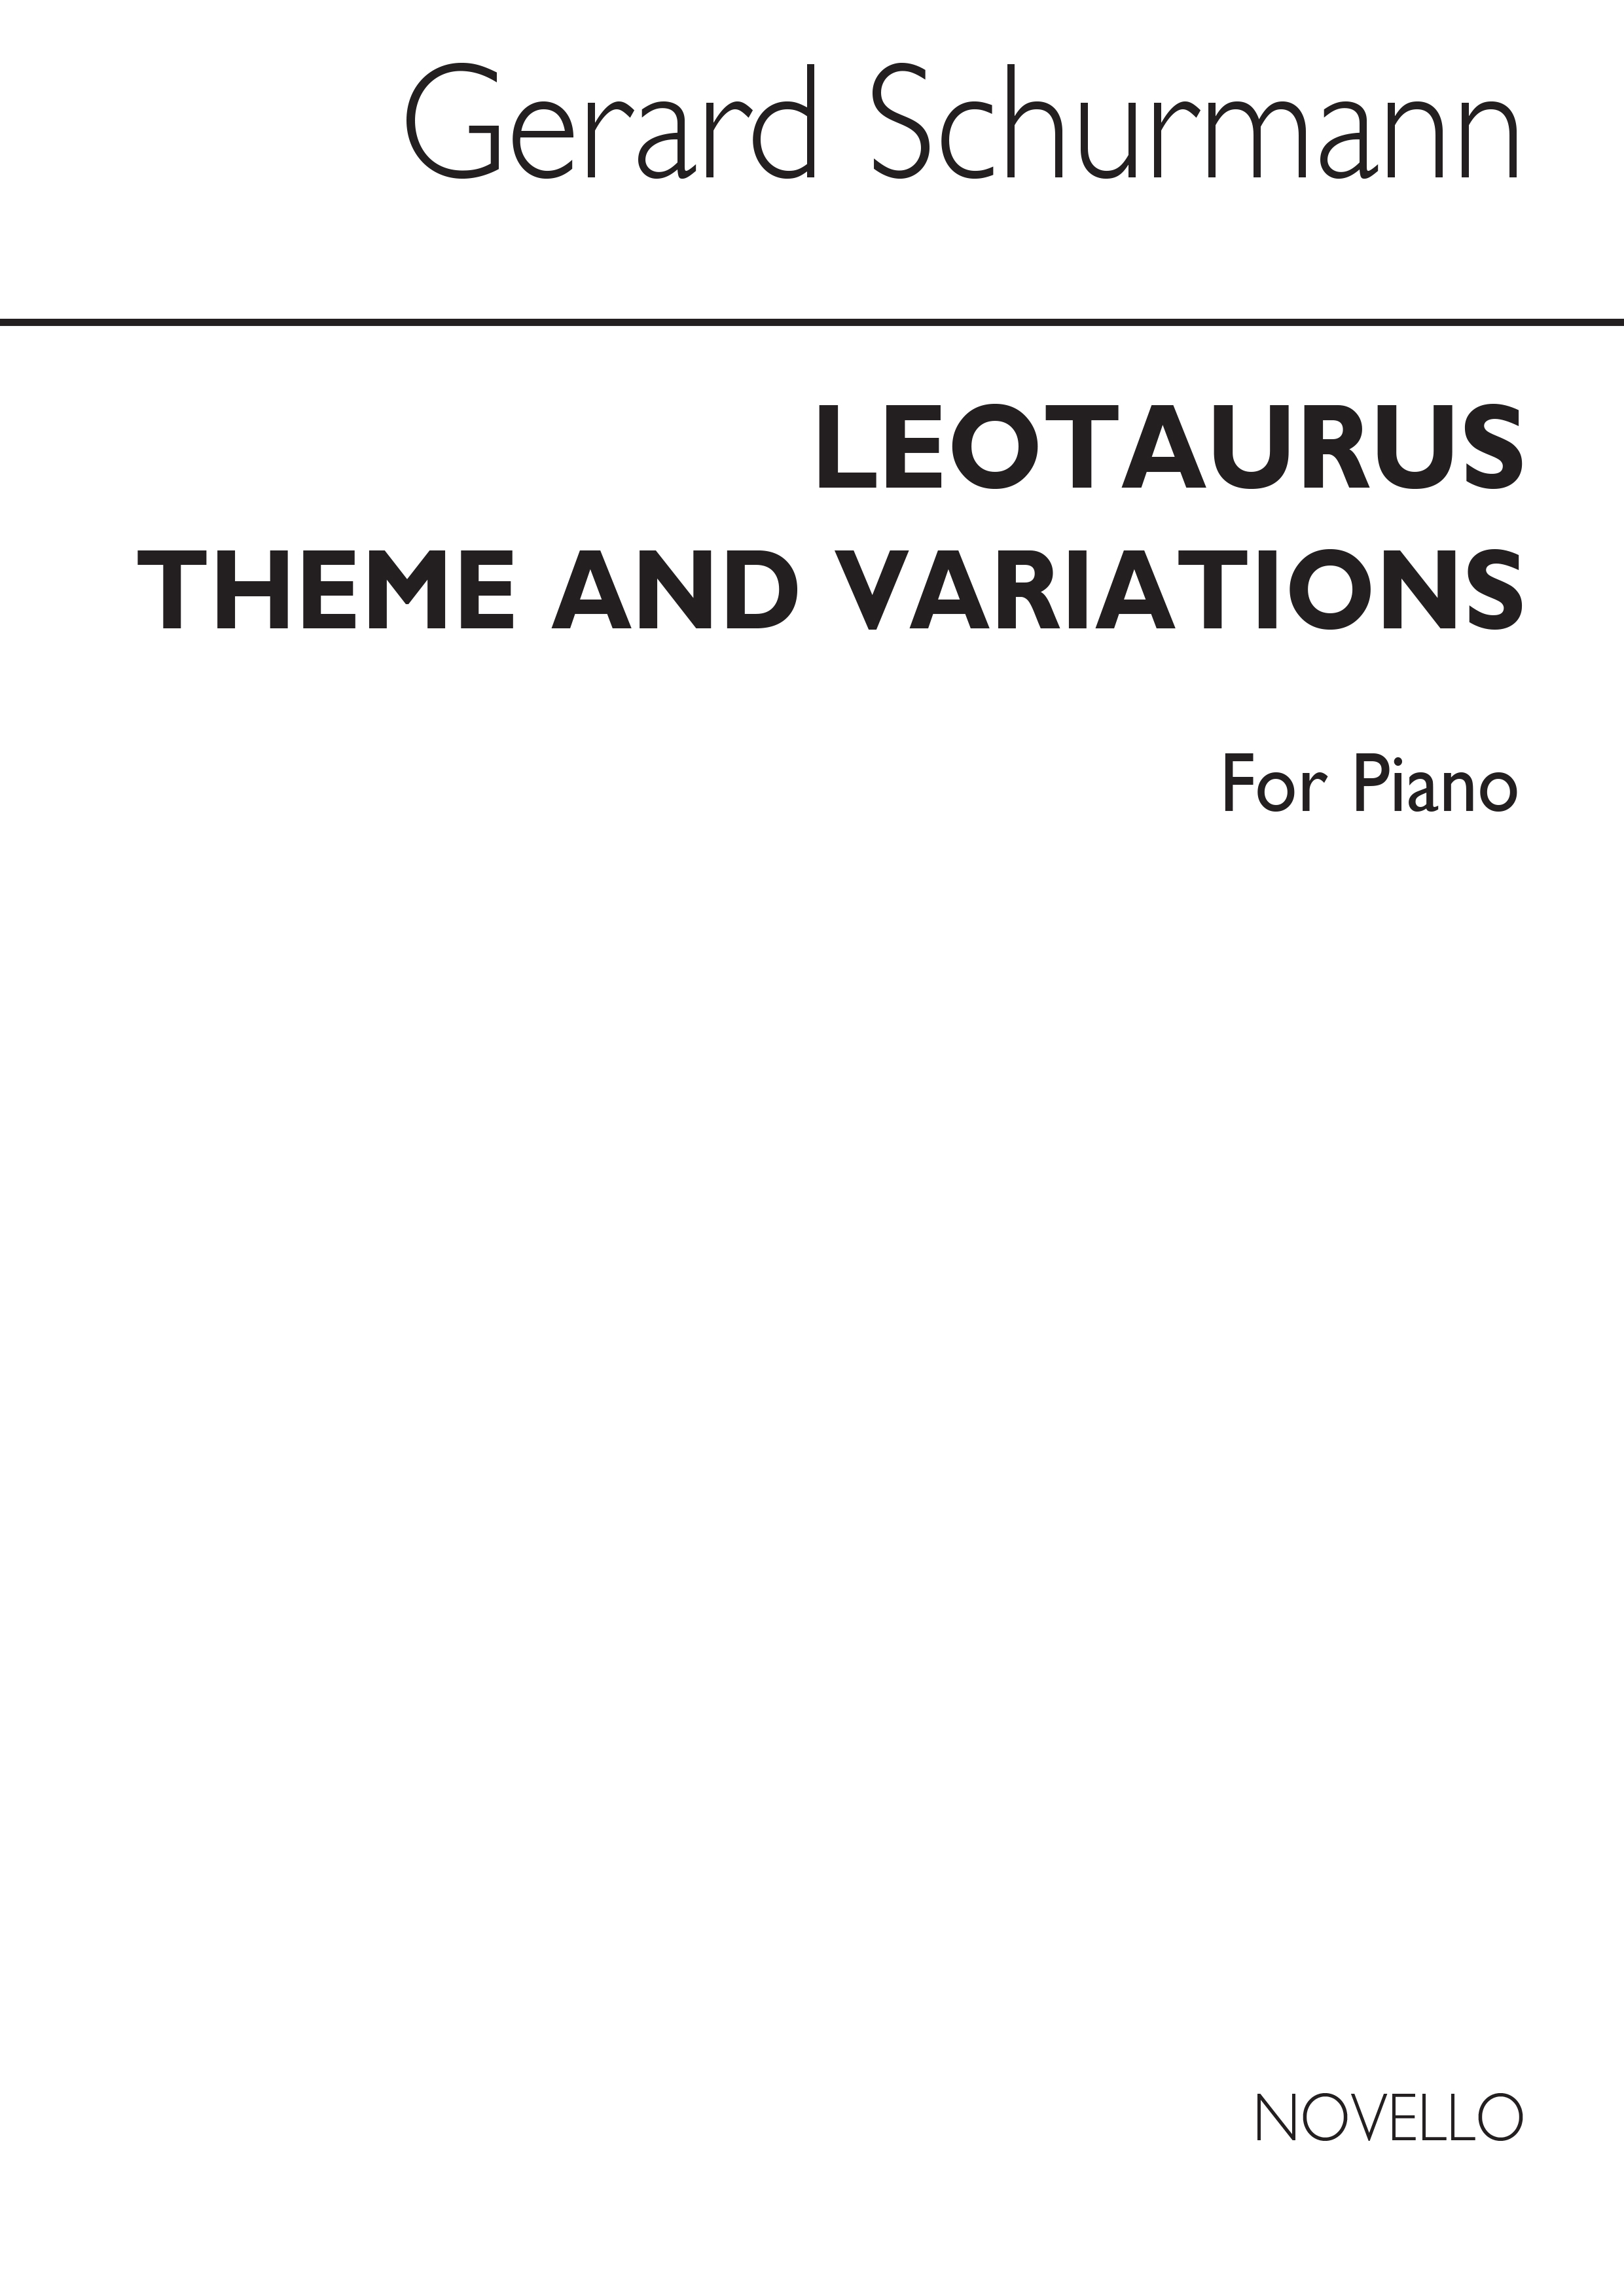 Schurmann: Leotaurus for Piano